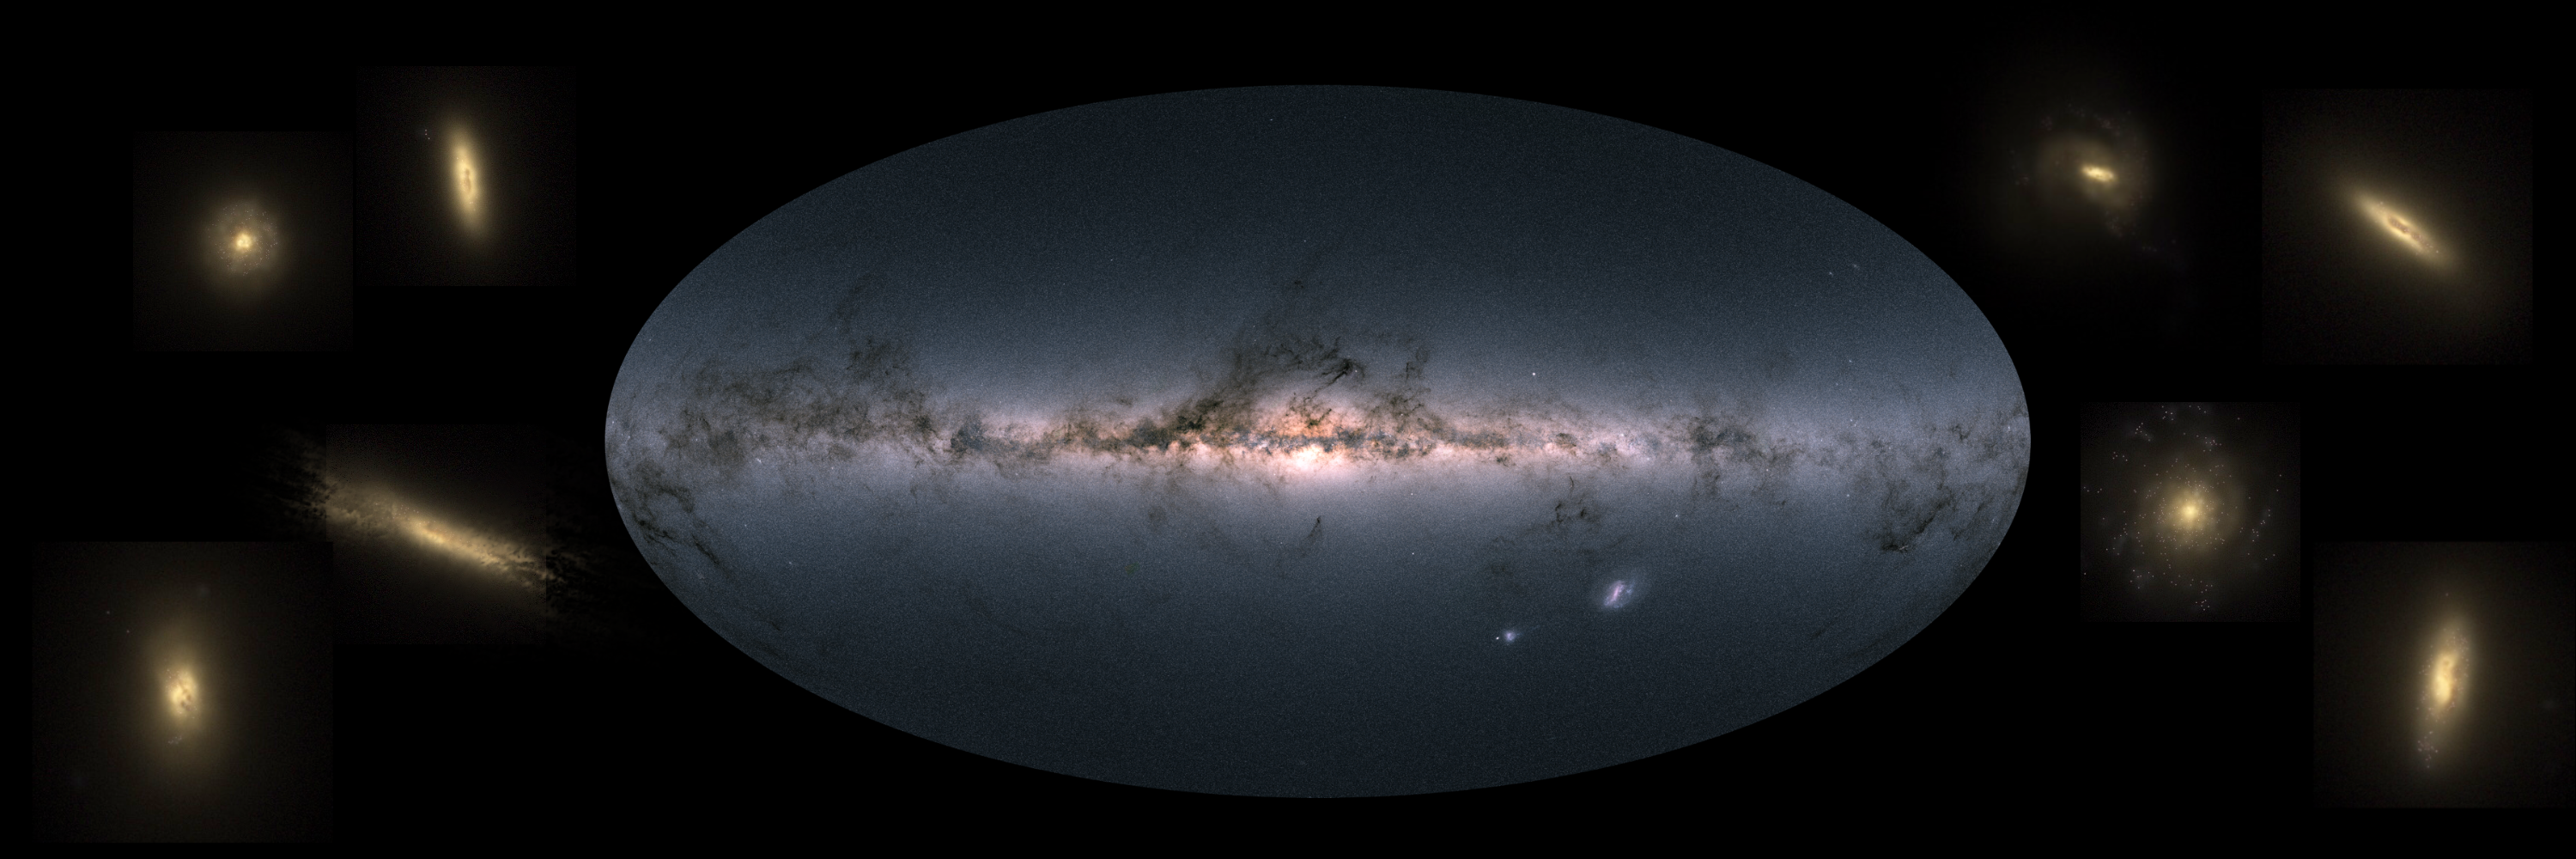 Image credit: ESA/Gaia/DPAC (for Milky Way image), Ted Mackereth